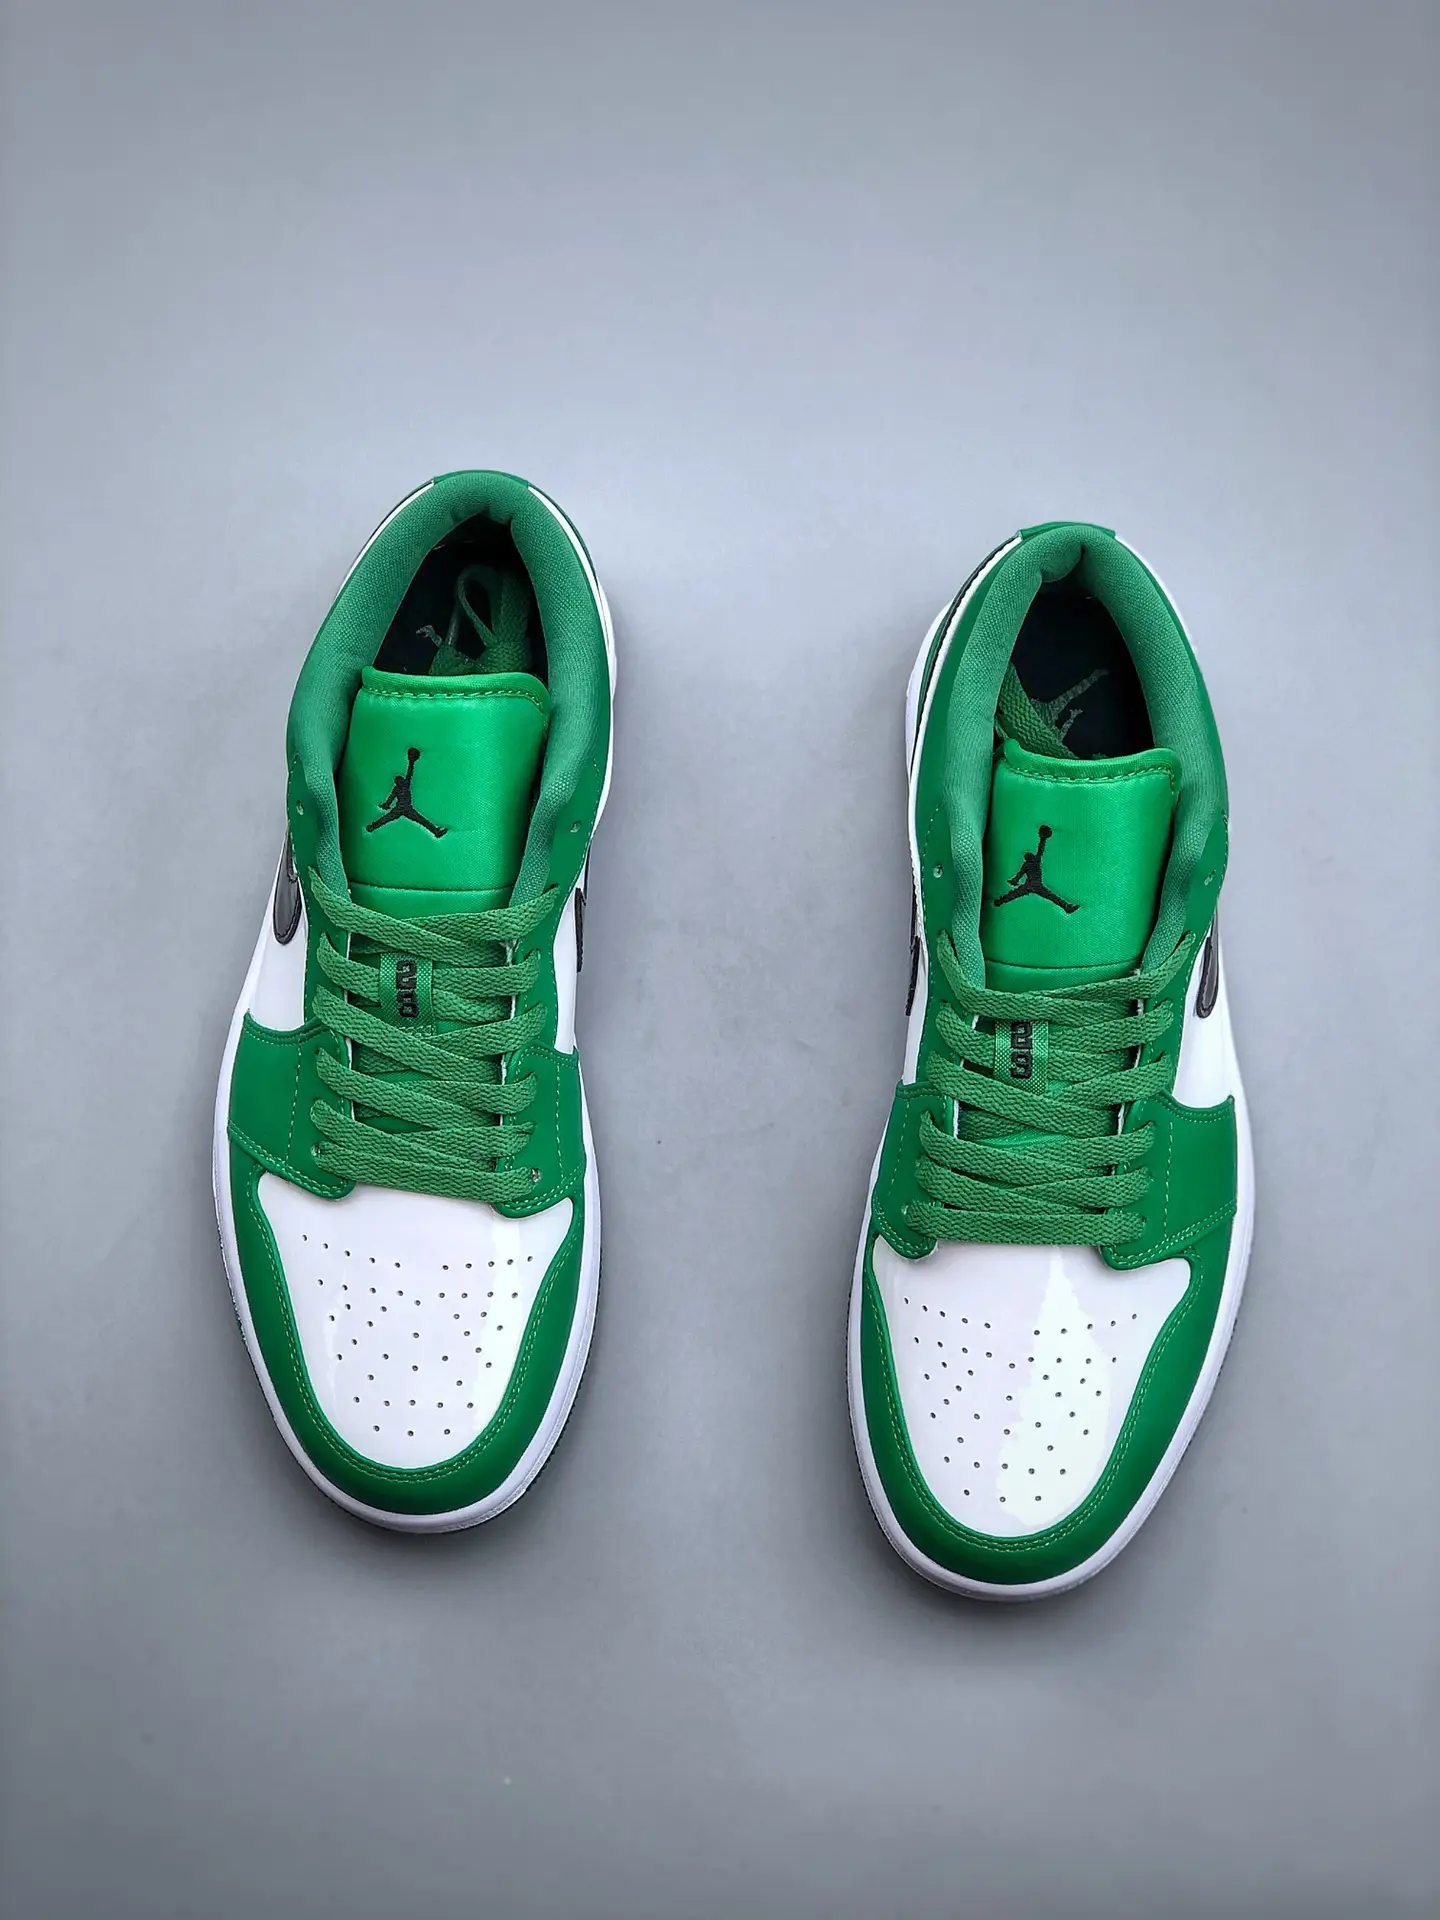 YASSW | Nike Air Jordan 1 Retro I Low Og Pine Green Black White Celtics Review